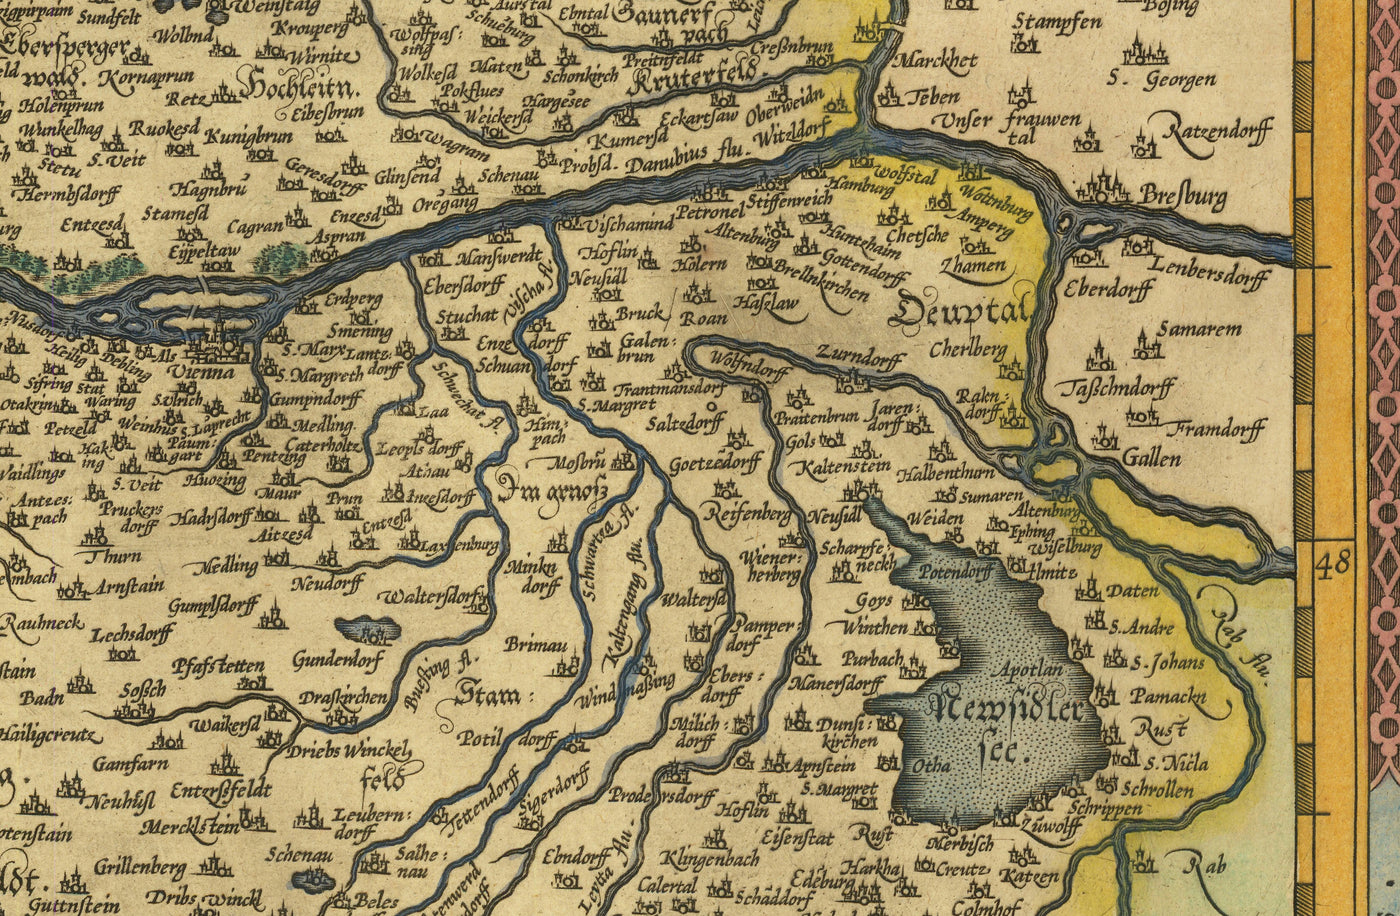 Old Map of Austria by Abraham Ortelius in 1594 - Vienna, Lake Neusiedl, Tulin, Bratislava, Wiener Neustadt